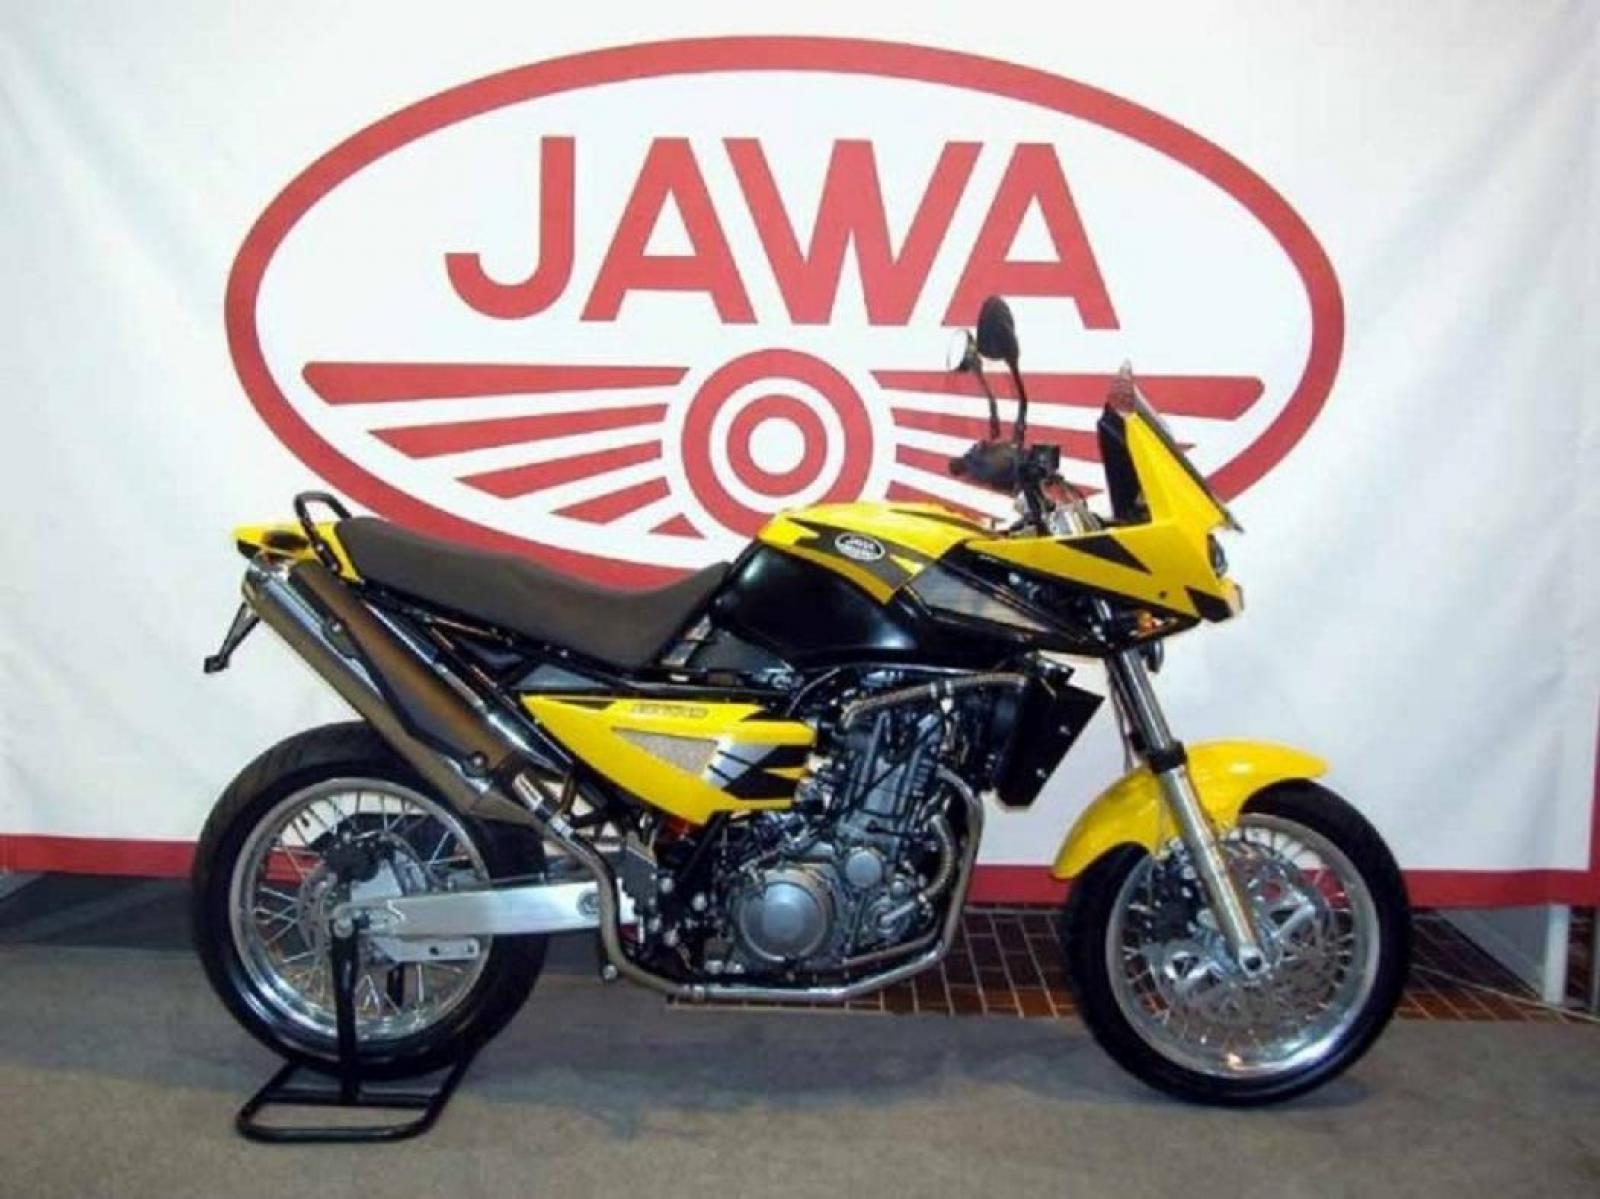 Мотоцикл ява цена новый с завода. Мотоцикл Jawa 650 Dakar. Мотоцикл Jawa 650 Dakar/Jawa. Ява 650 Дакар. Ява Дакар 660.